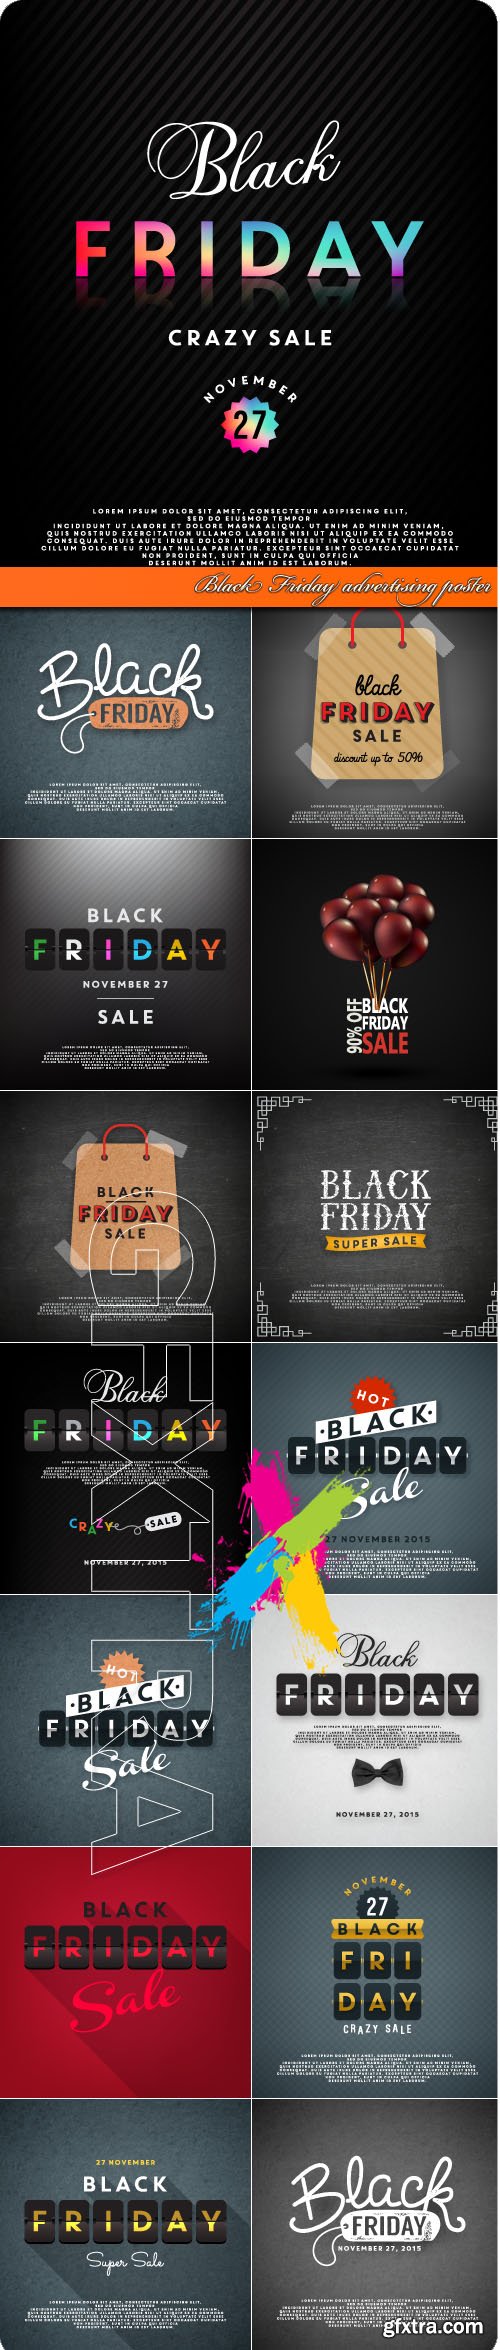 Black Friday advertising poster vector